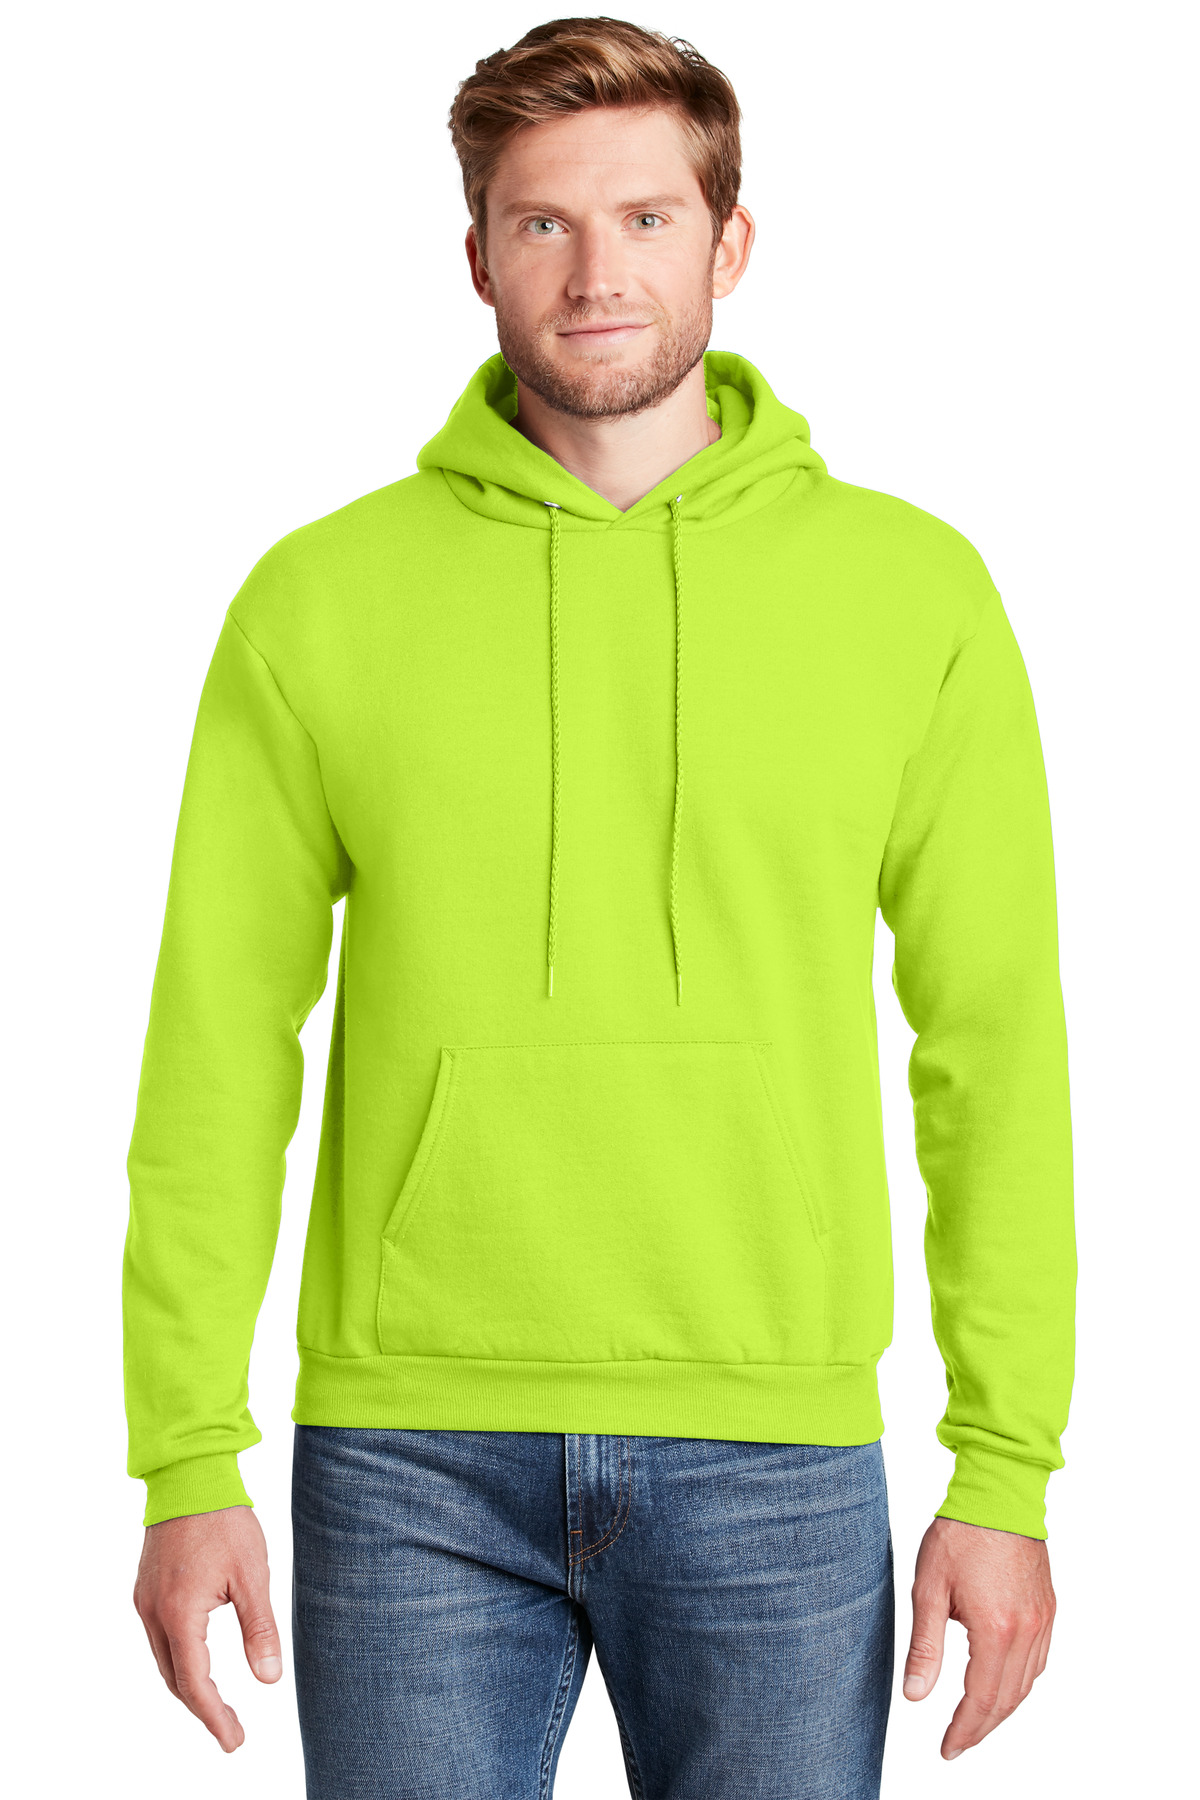 Hanes EcoSmart - Pullover Hooded Sweatshirt - P170